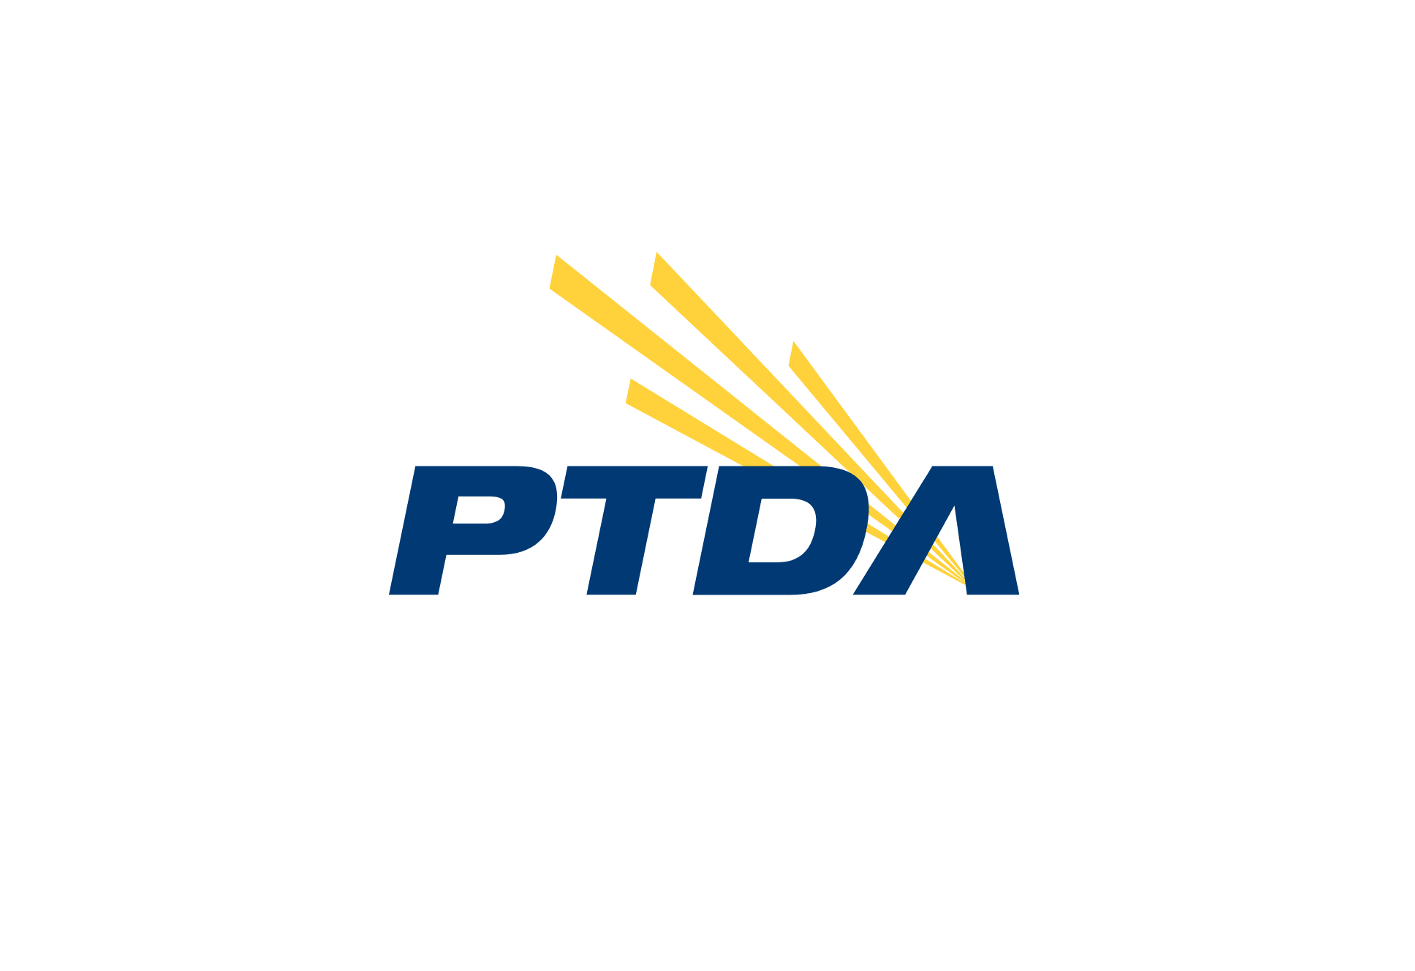 PTDA logo